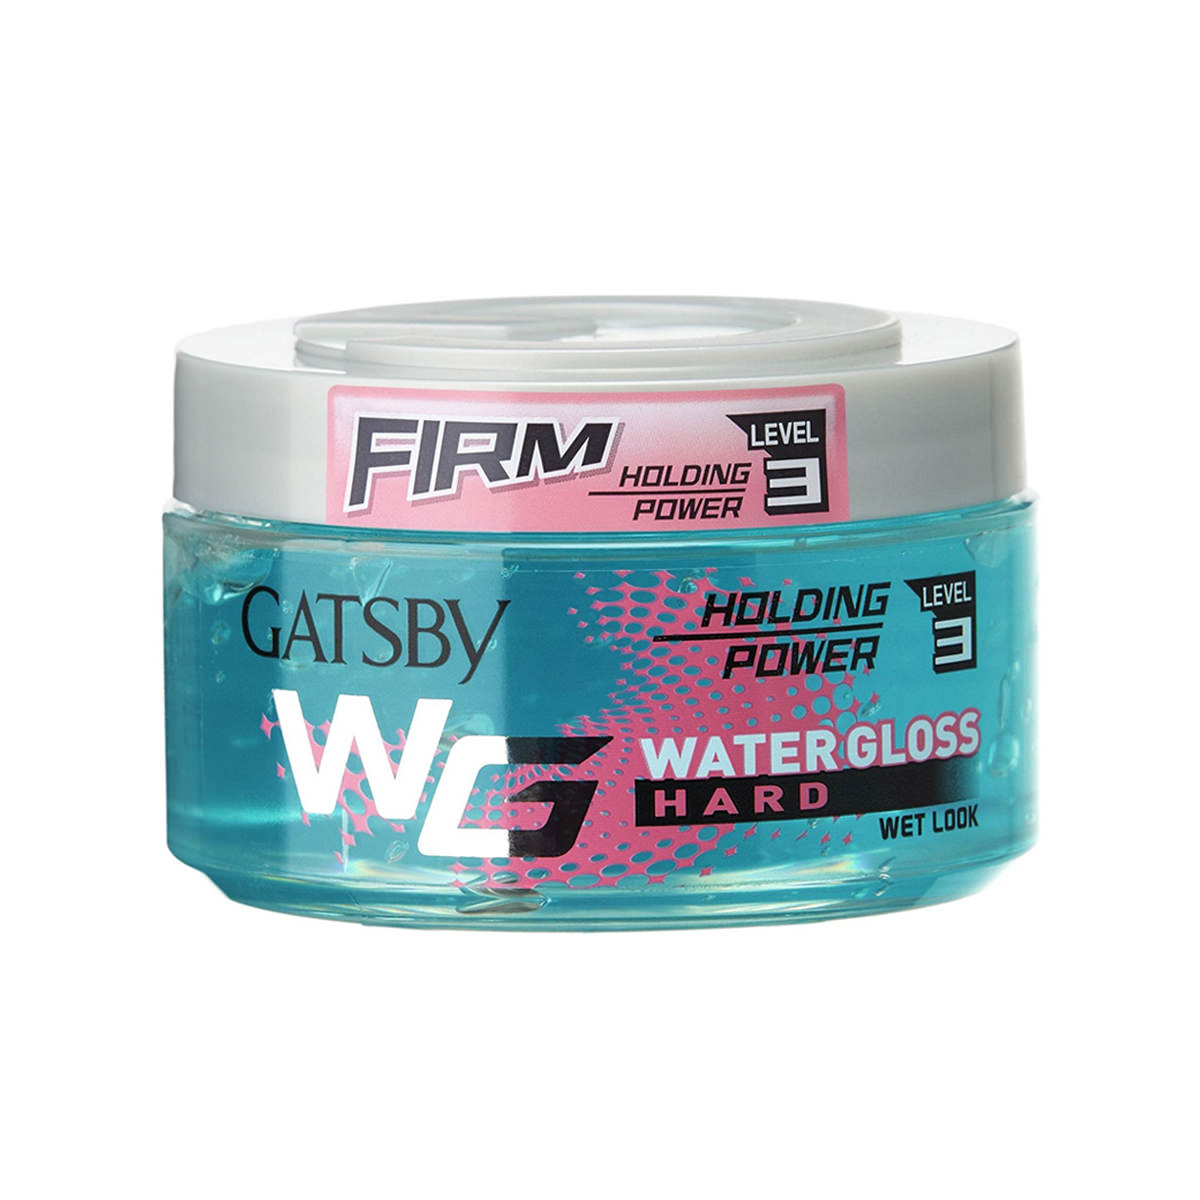 Gatsby-Water-Gloss-Hard-Holding-Power-Level-3-Jar-(150-g)-sfw(1)